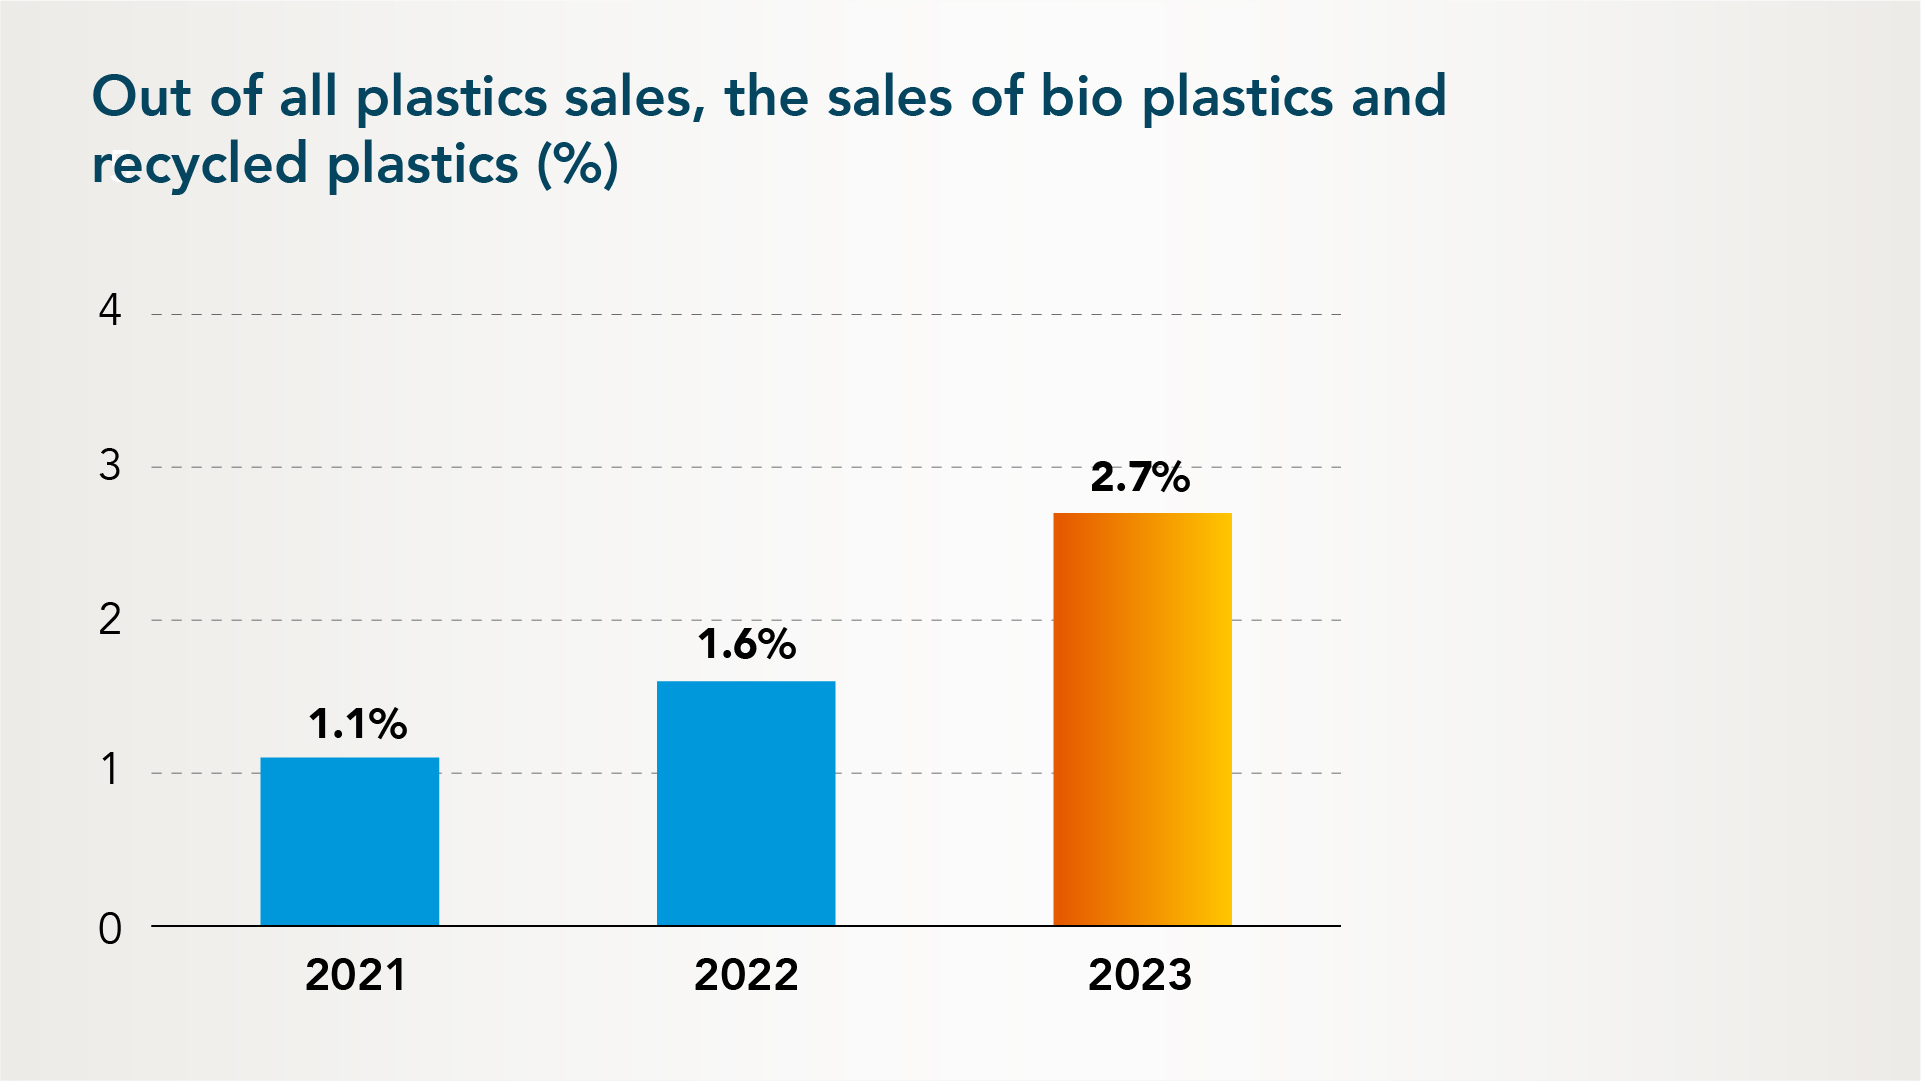 Telko__Plastics_sales_bio-and-recycled_2023